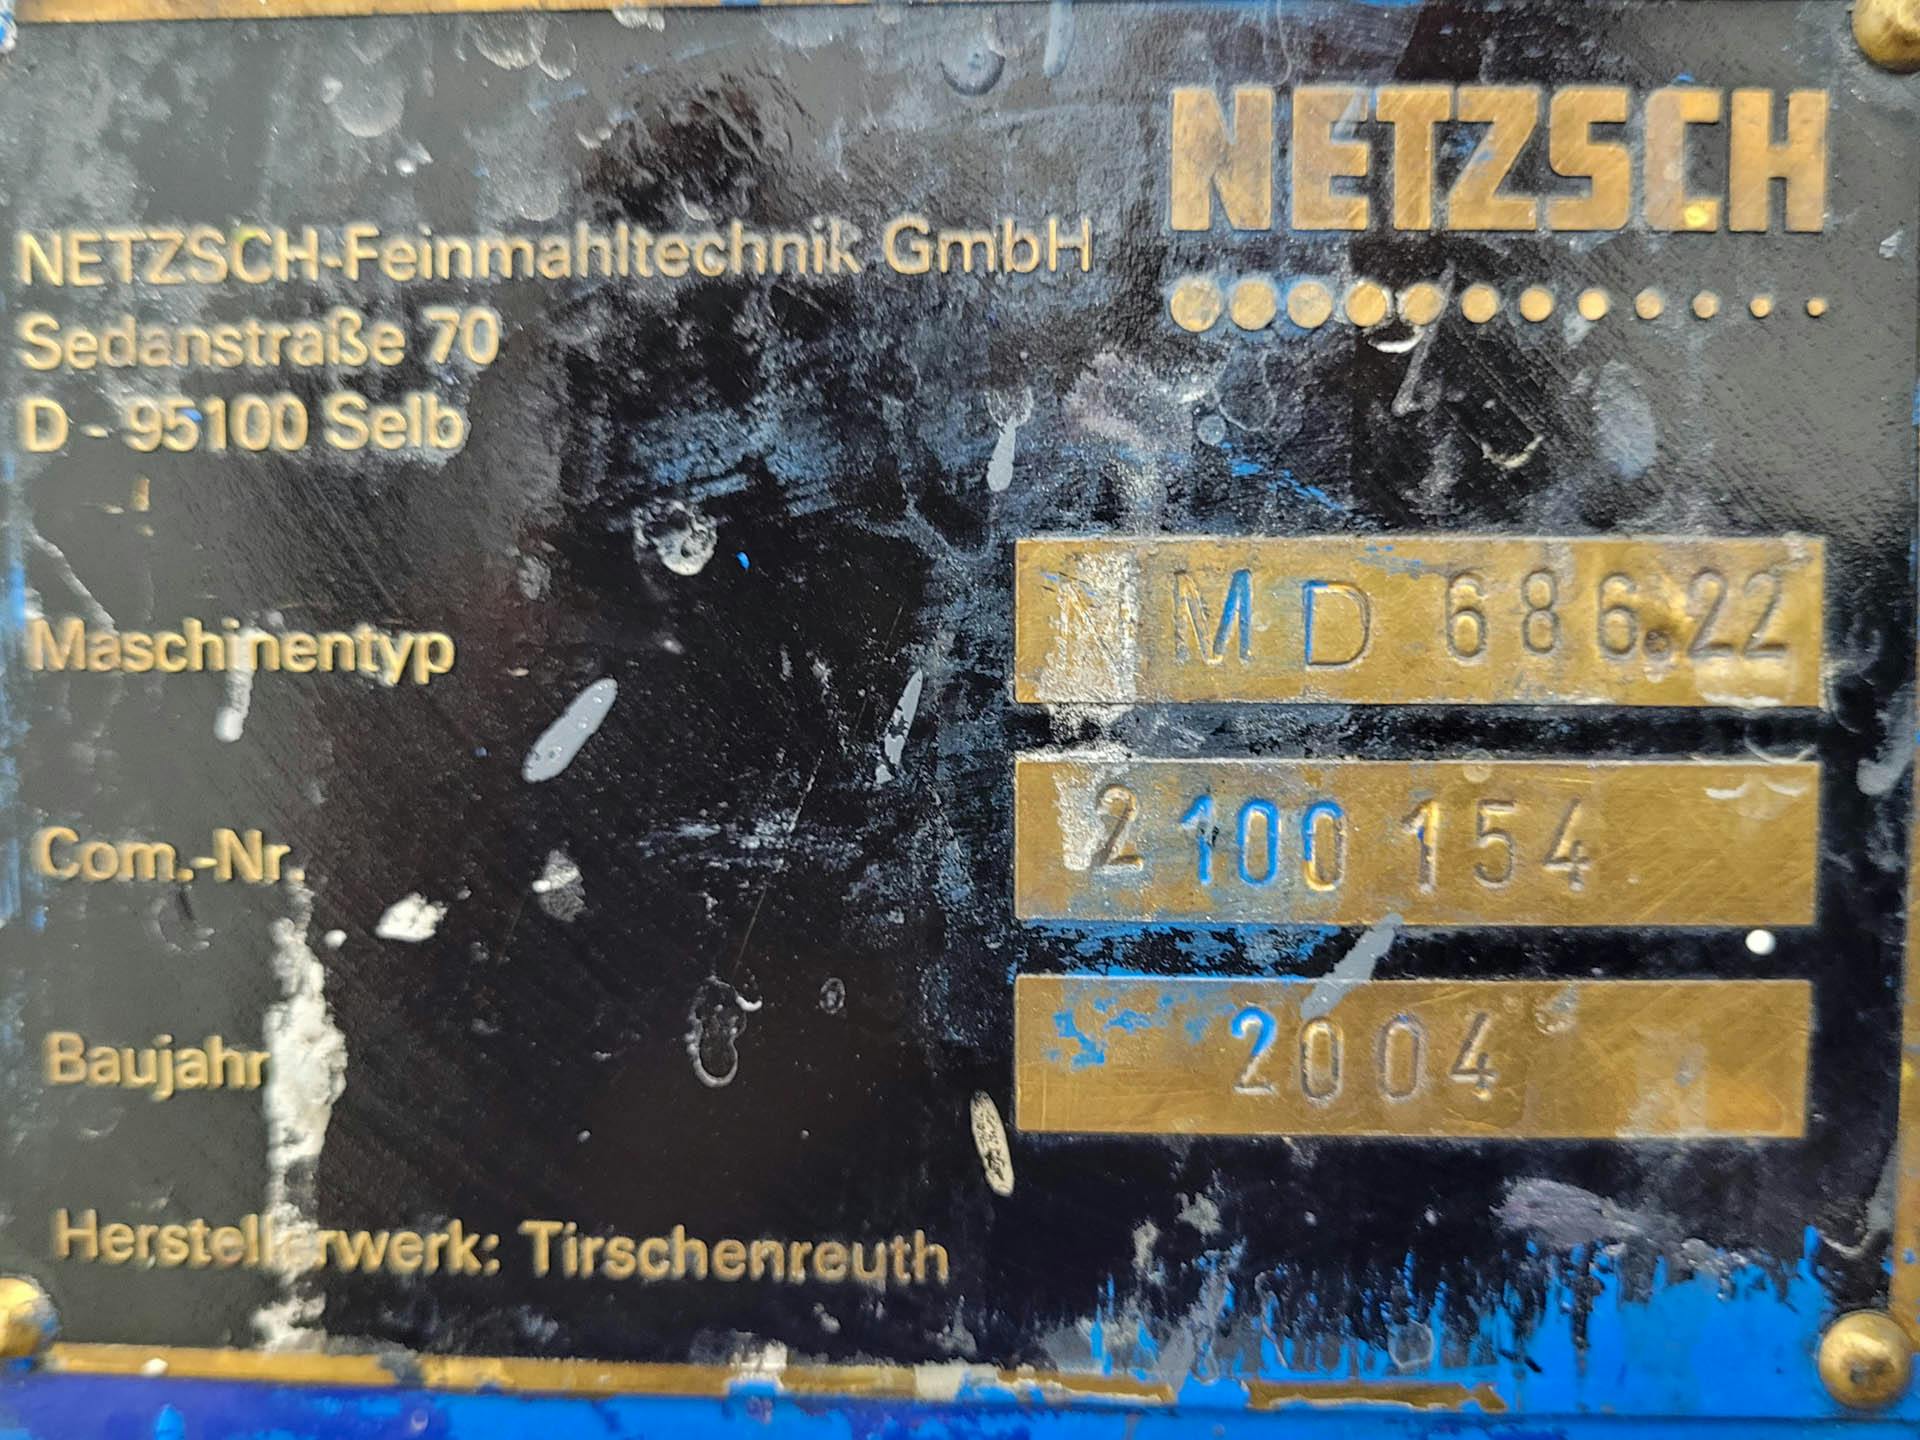 Netzsch NMD 686 22 - Rozpouštec - image 8